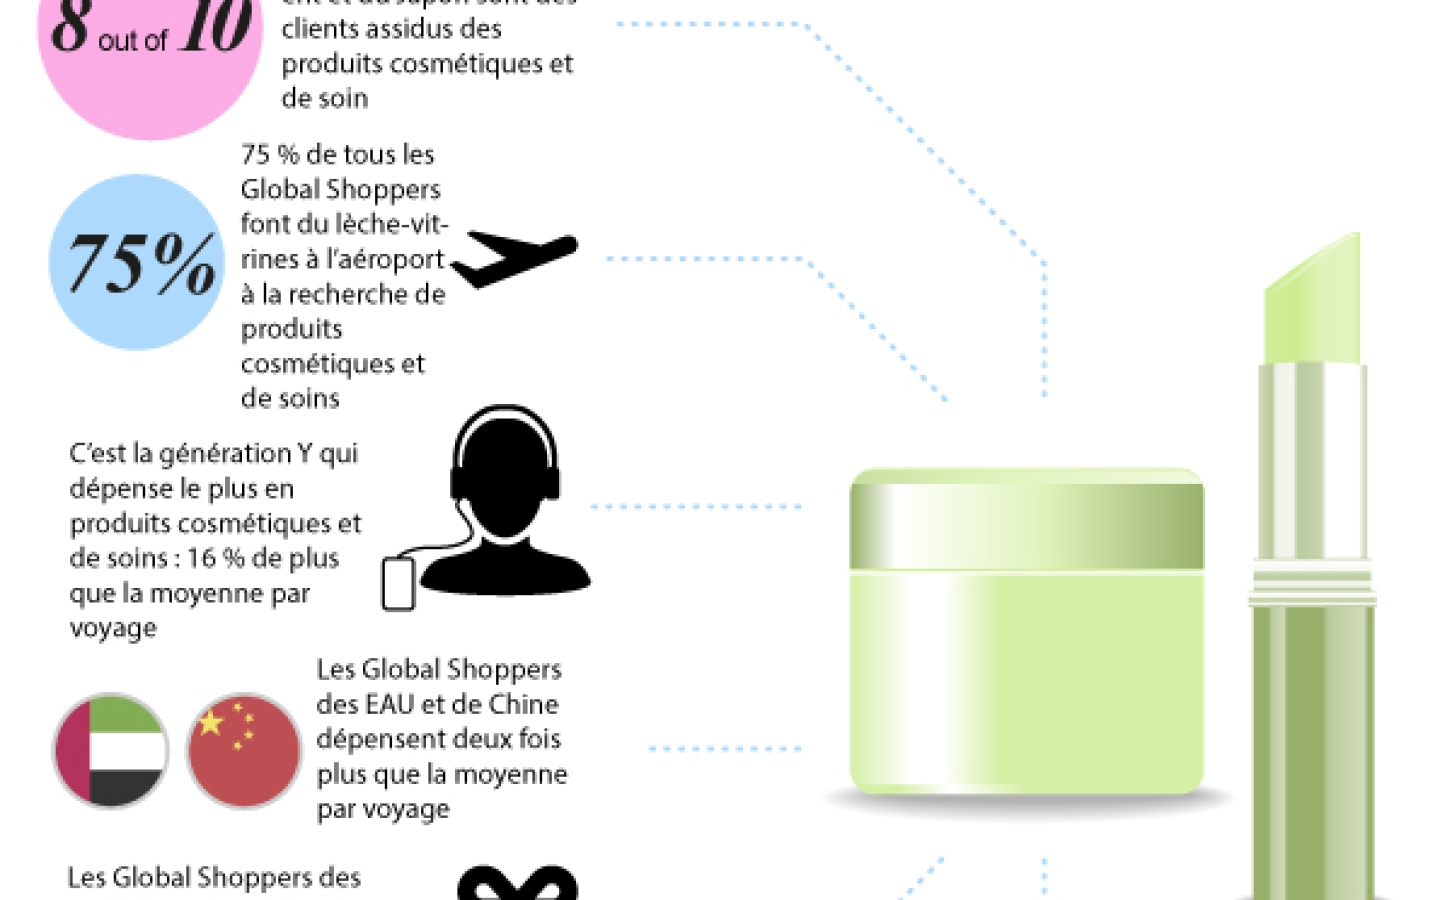 JCDecaux Global Shopper Connections 2 - Cosmetiques et soins, l'Infographie